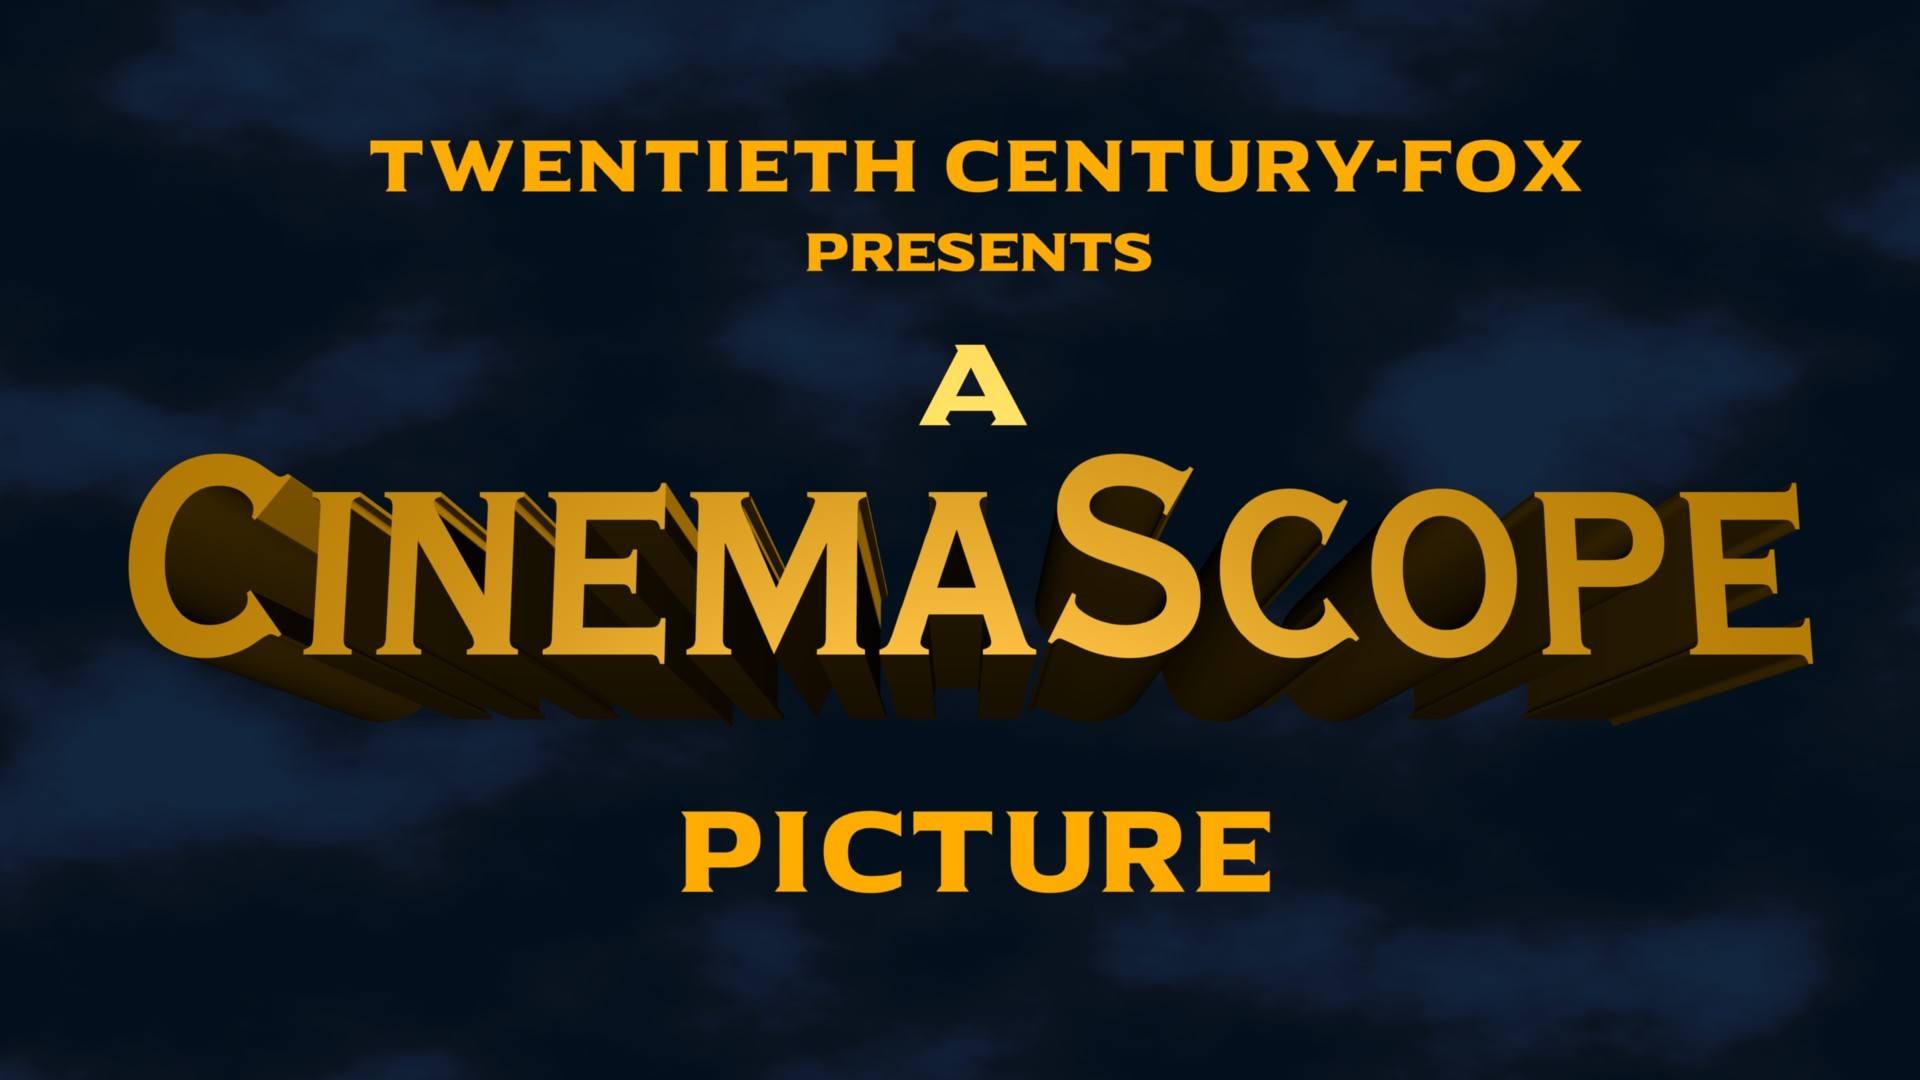 1920x1080 ... My edit on the 20th Century Fox CinemaScope logo by 20thCenturyDogs